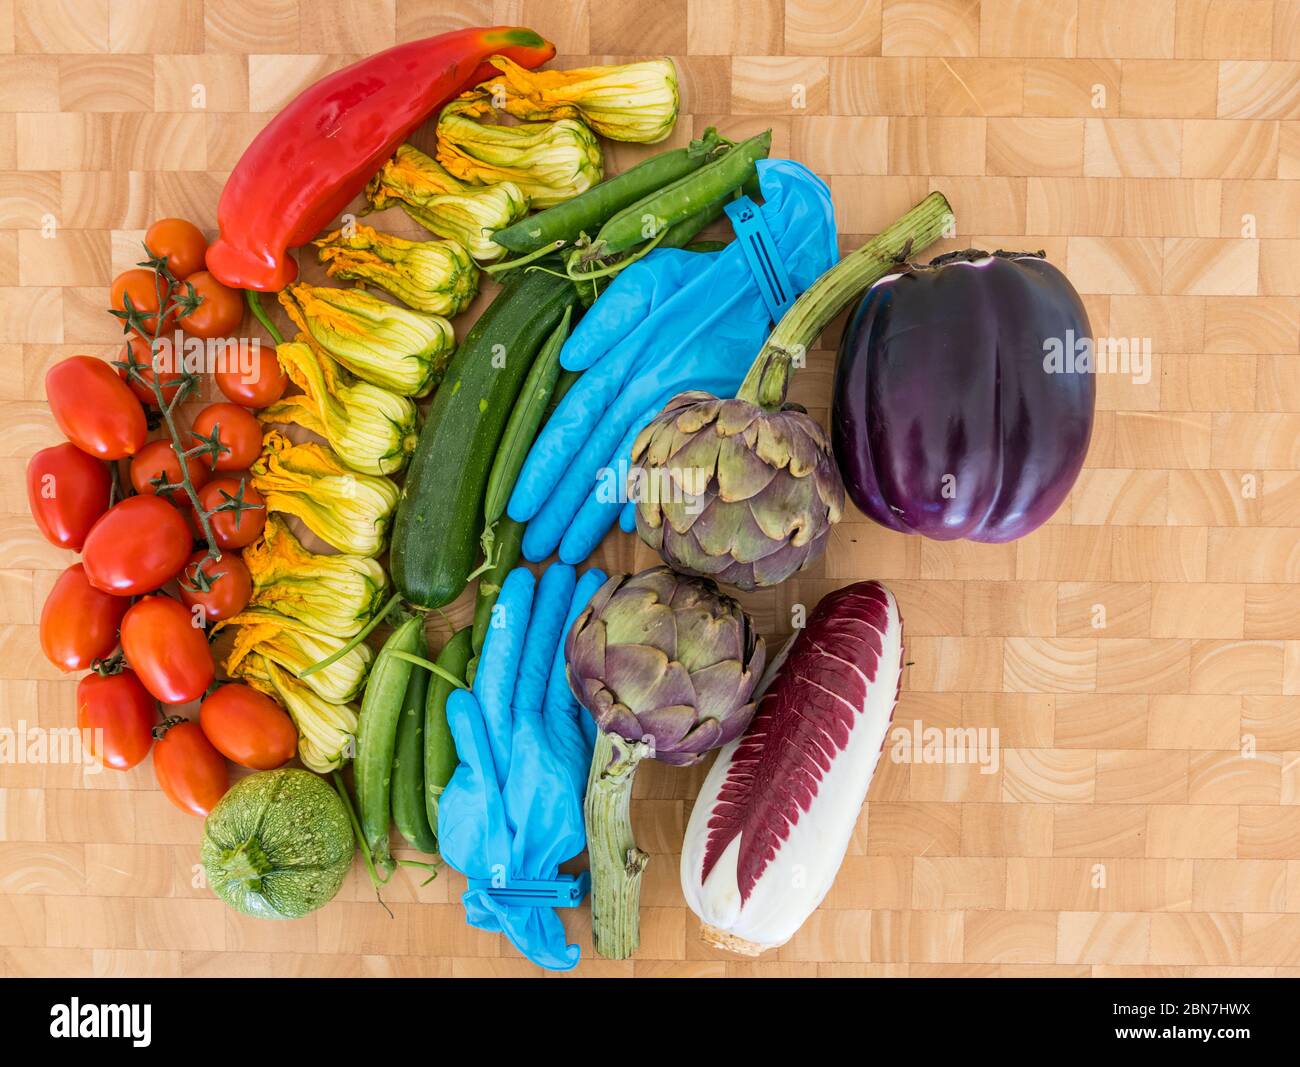 Rainbow of vegetables hope symbol Covid-19 Coronavirus pandemic: tomatoes, courgette flowers, peas, artichokes, endive, aubergine, surgical gloves Stock Photo